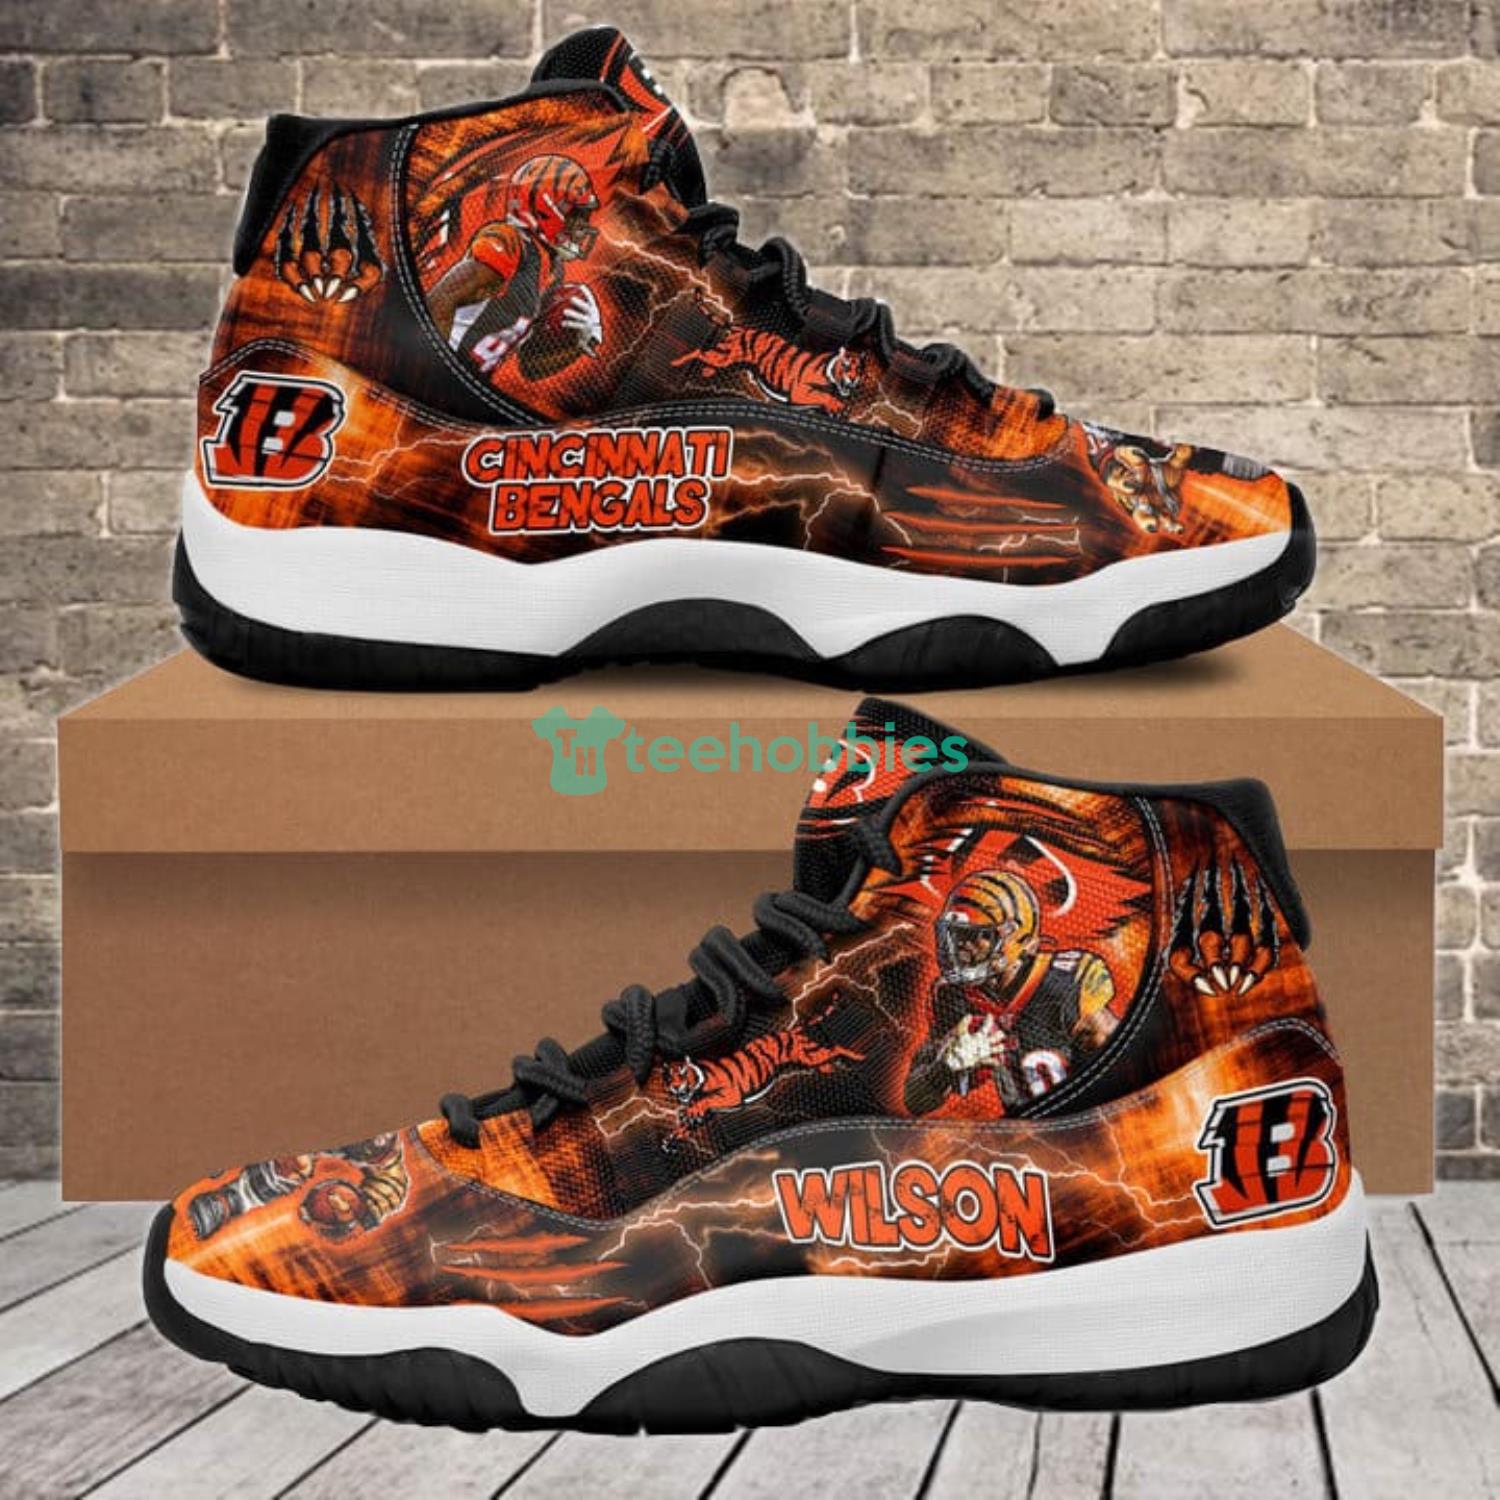 Cincinnati Bengals Brandon Wilson Air Jordan 11 Shoes Sneaker For Fans Product Photo 1